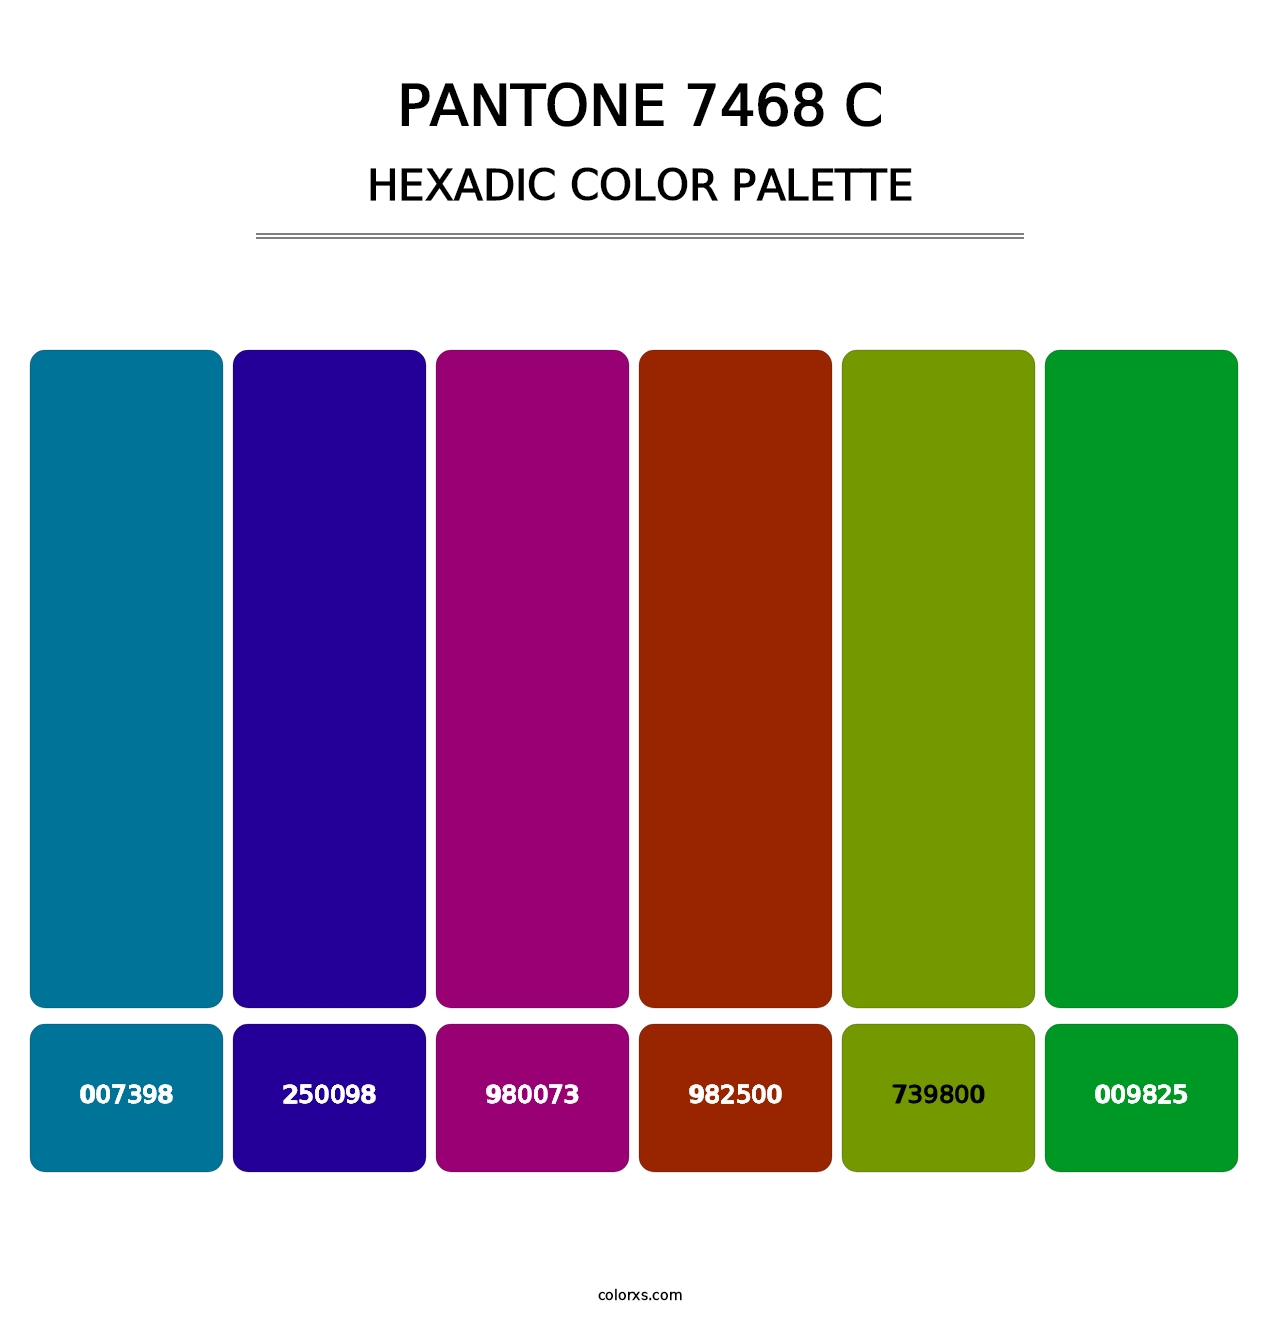 PANTONE 7468 C - Hexadic Color Palette